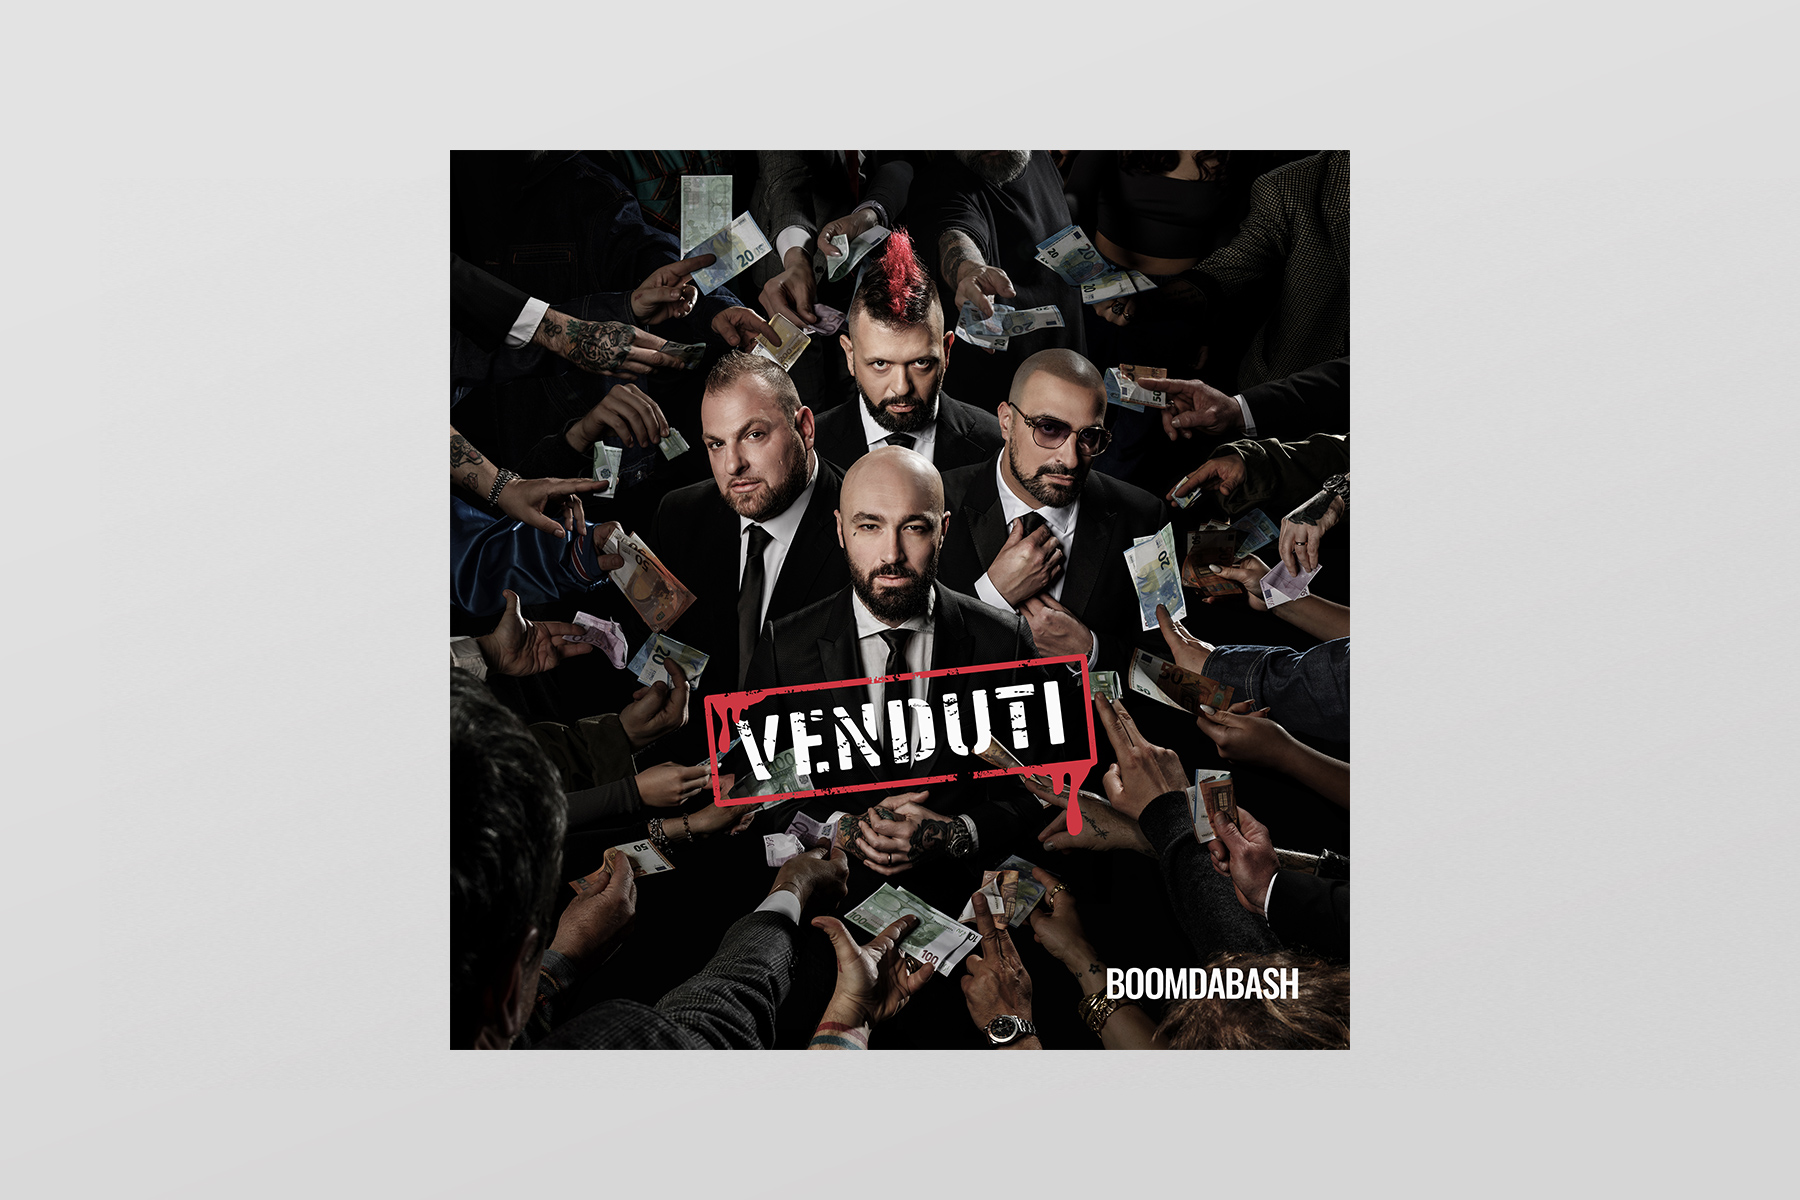 Boomdabash “Venduti” – CD/Vinyl Pack - img 1